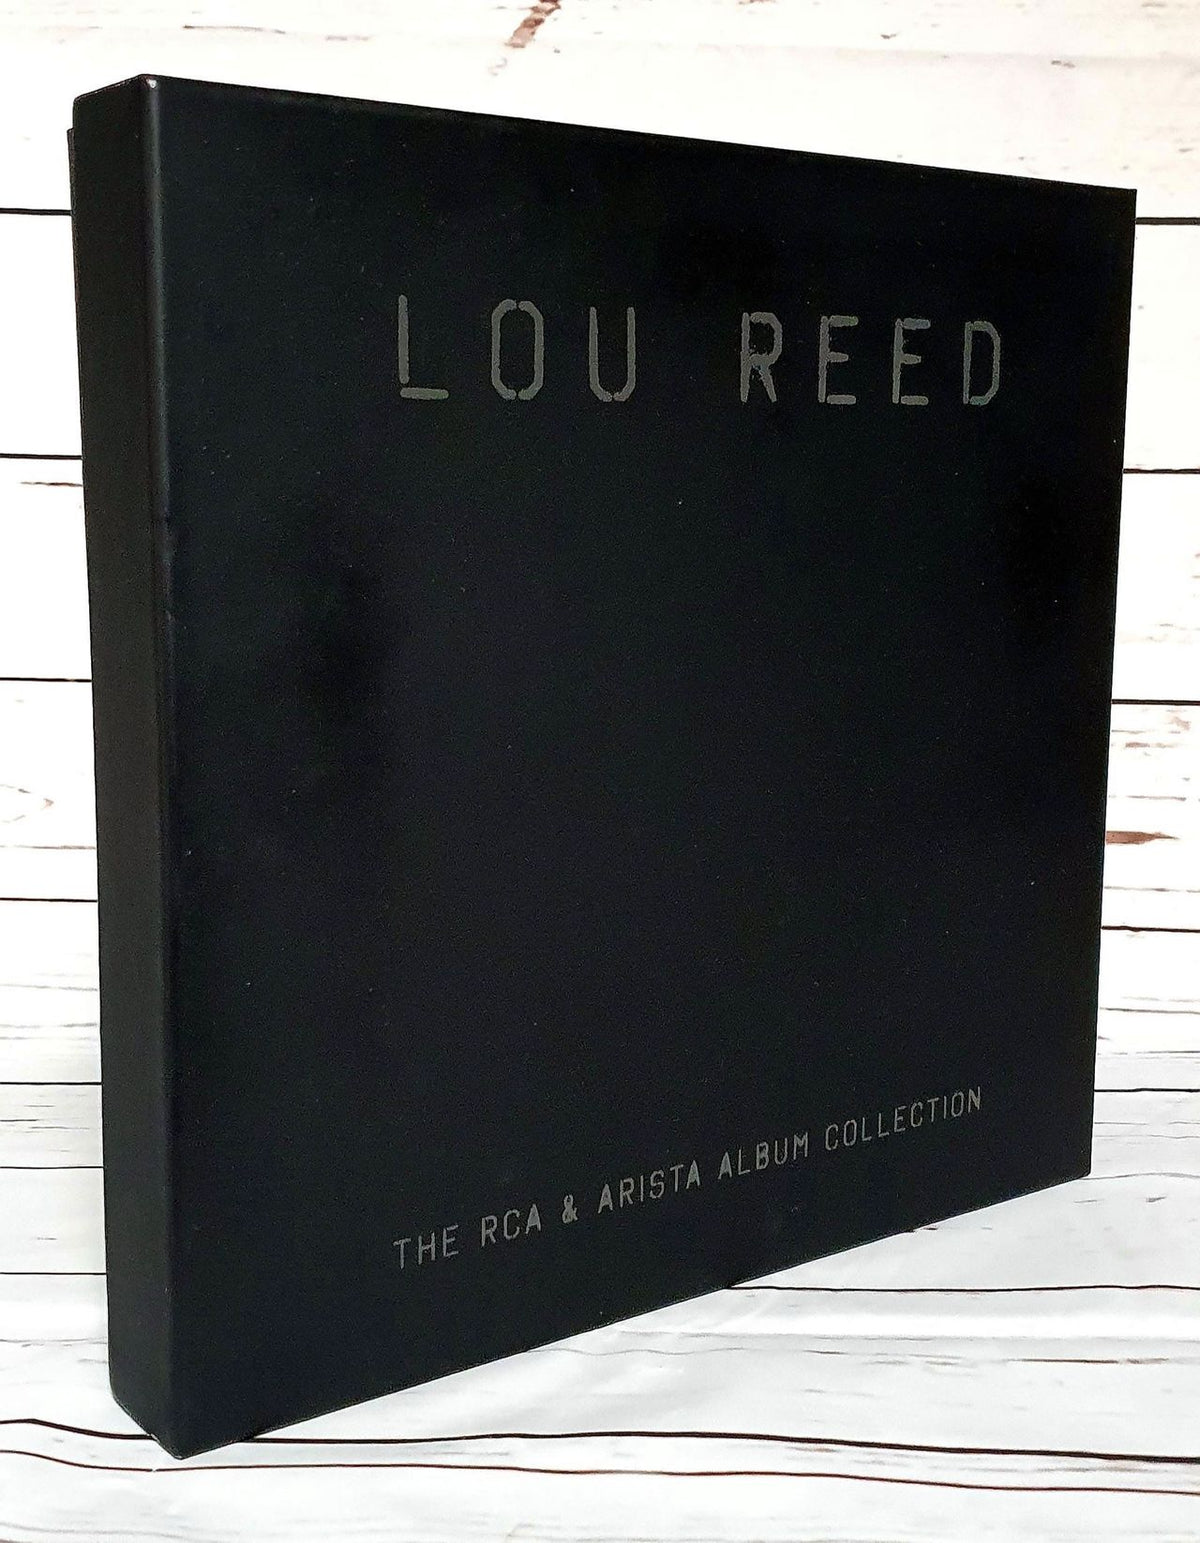 Lou Reed The RCA & Arista Album Collection UK Cd album box set